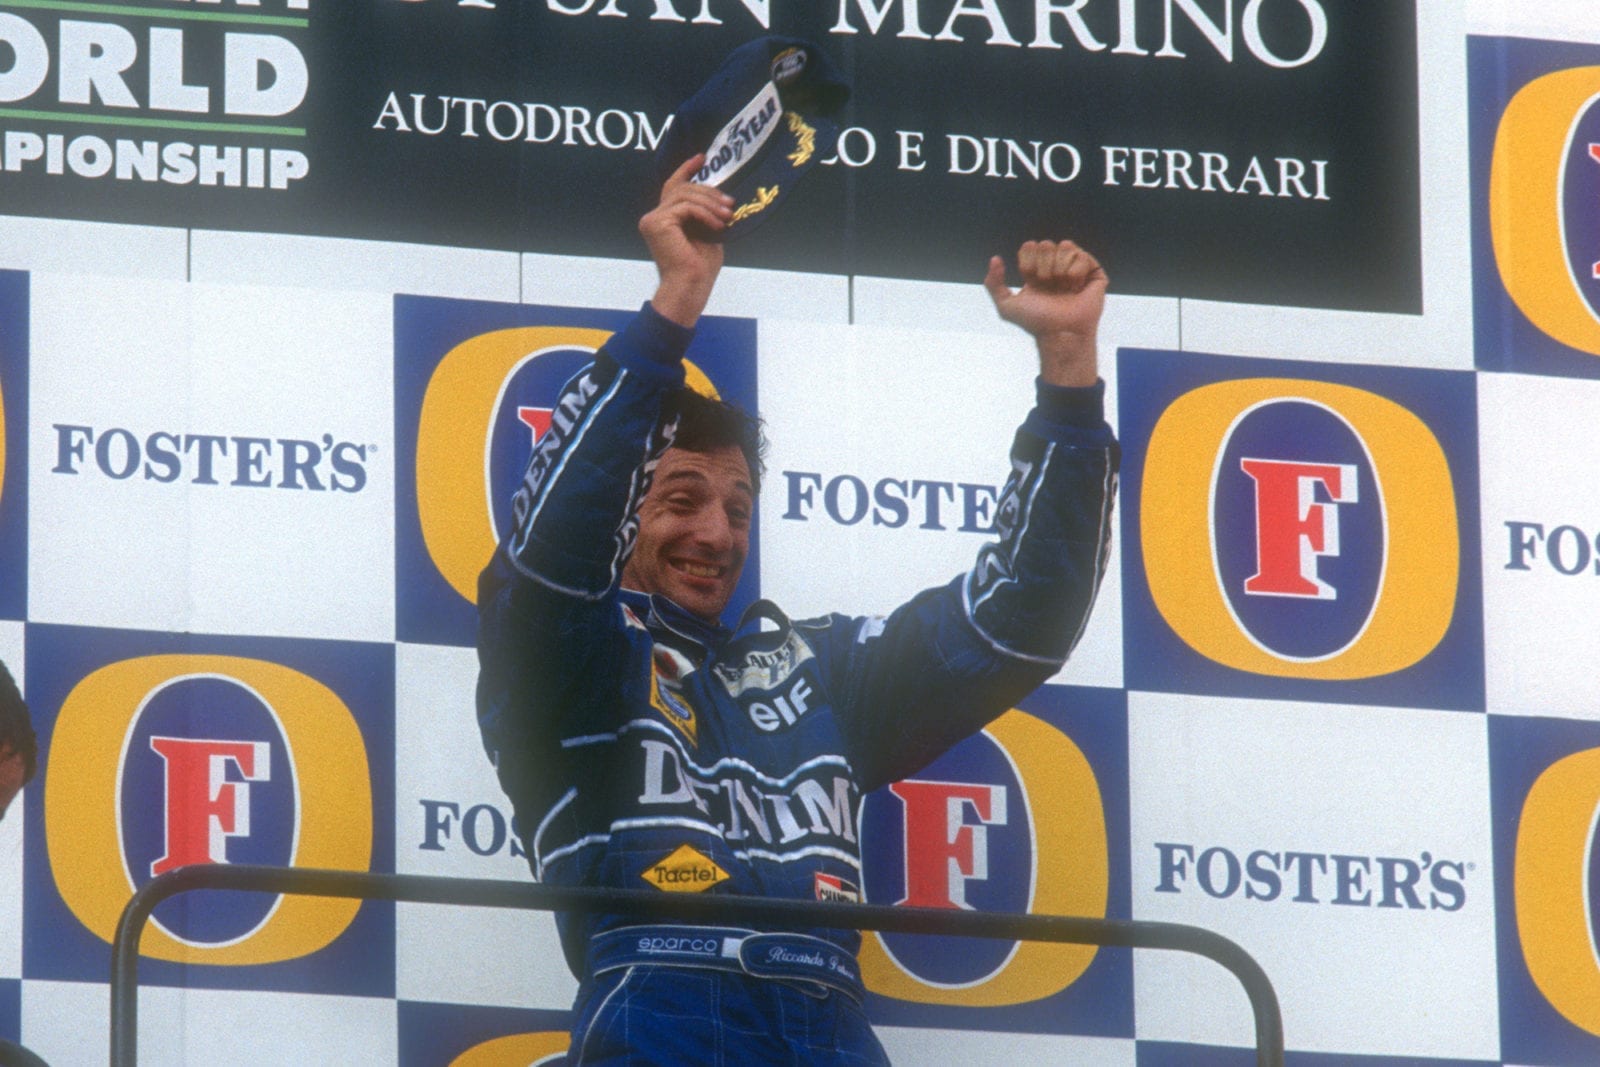 Riccardo Patrese on the podium after winning the 1991 San Marino Grand Prix